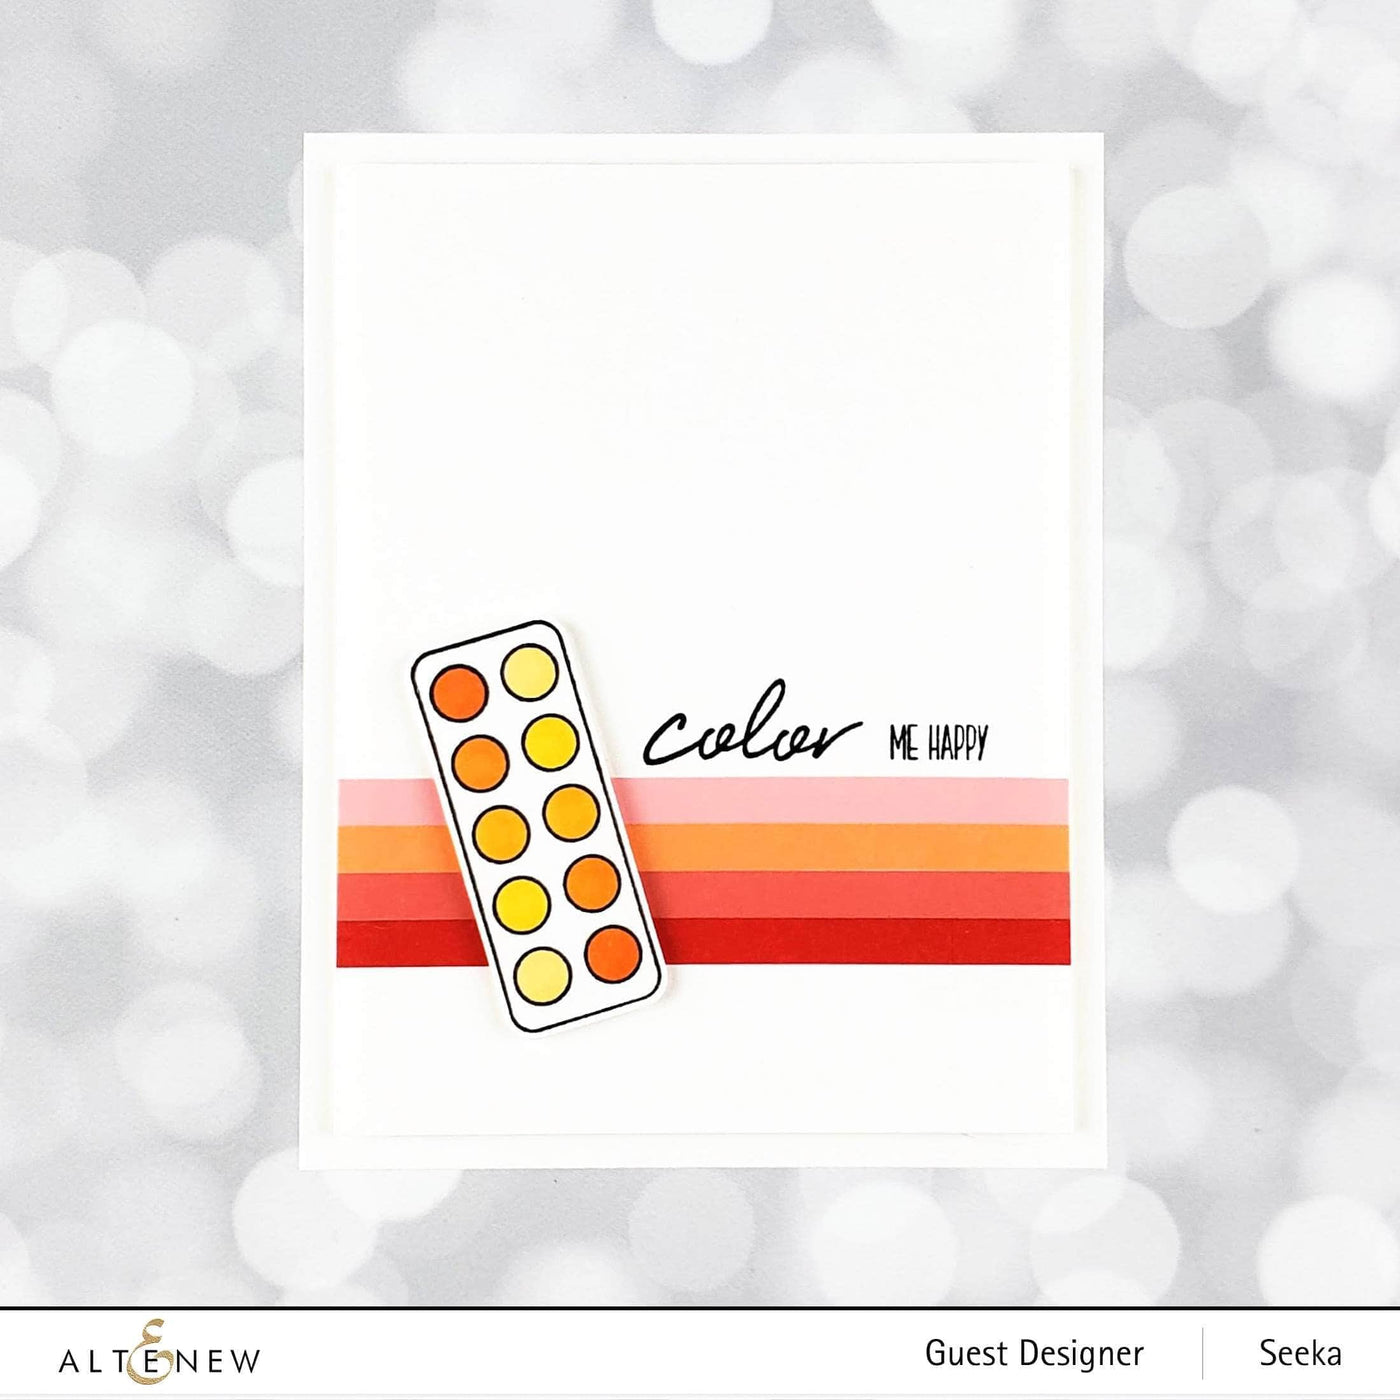 Altenew - Clear Stamps & Die bundle - Mini Delight: Mini Paintbox Stamp &  Die Set